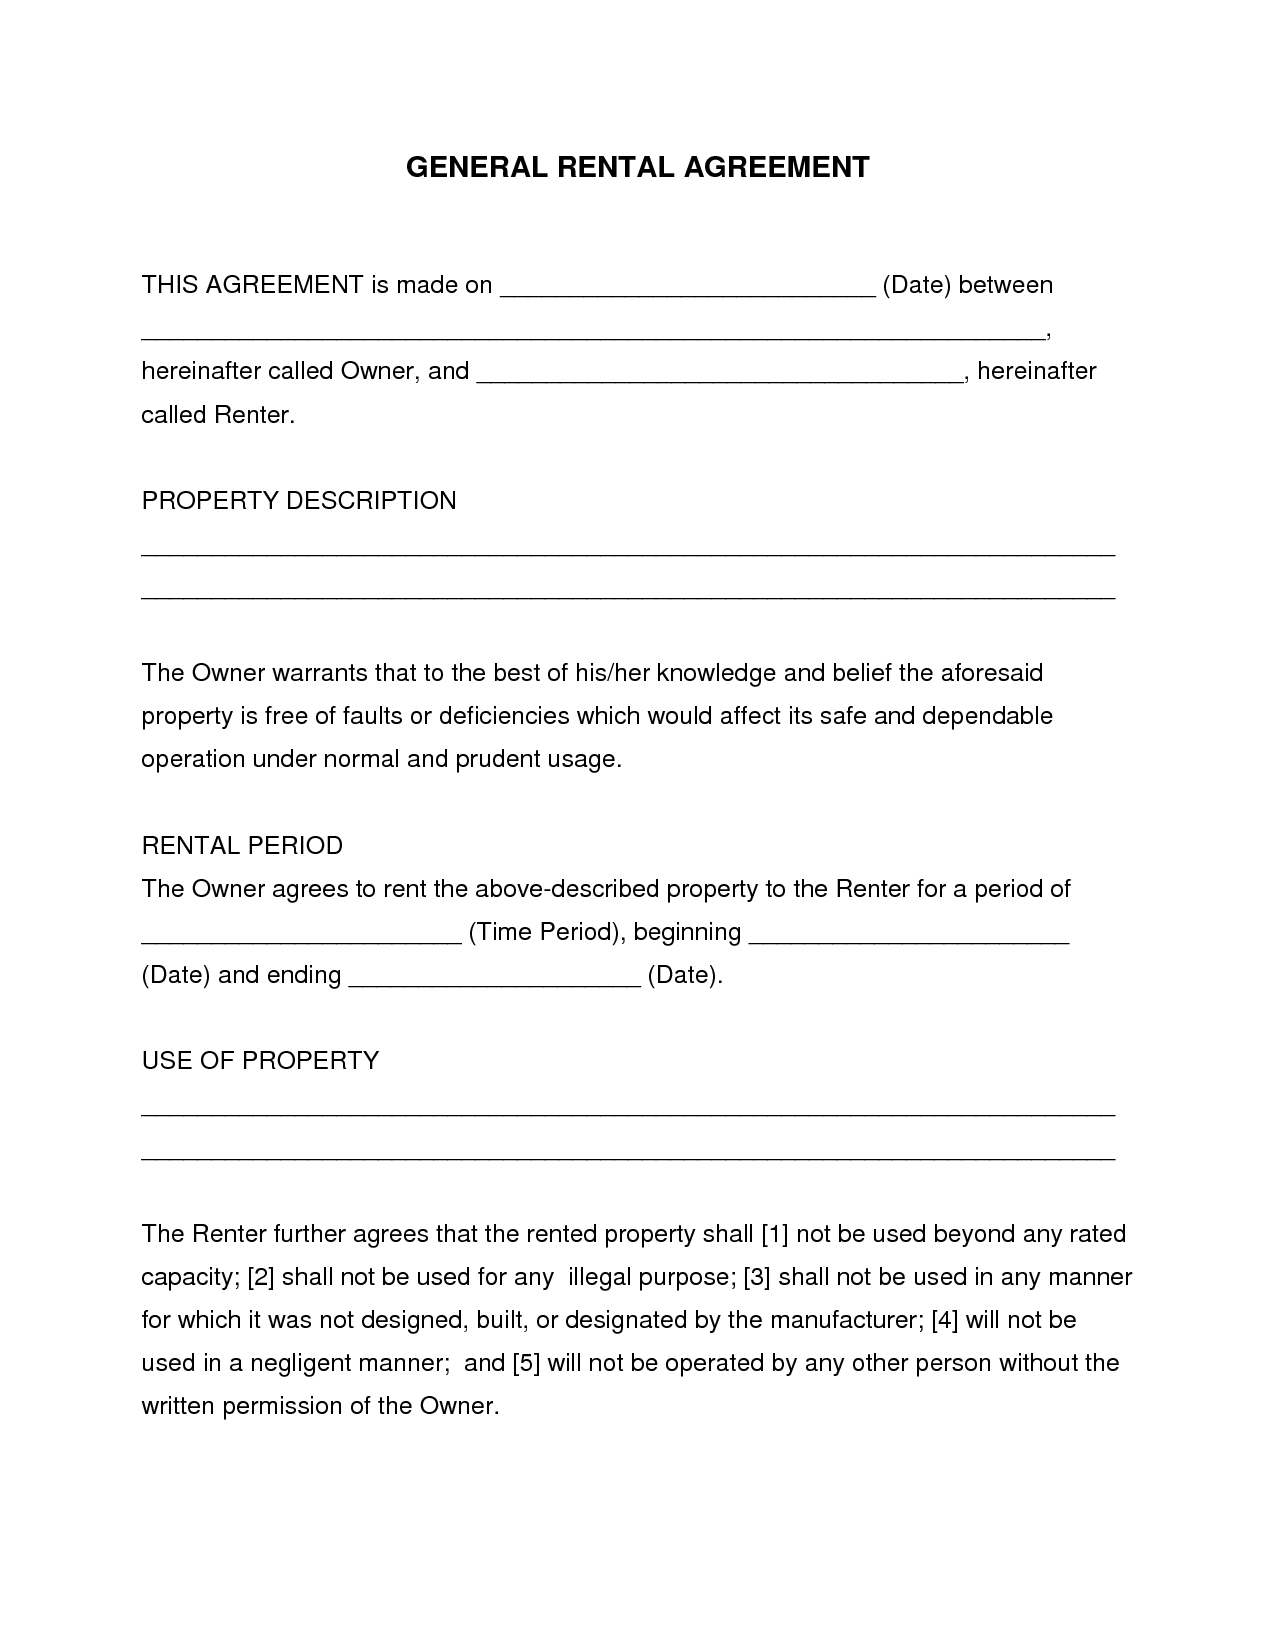 General Rental Agreement template sample Designed by bighug 